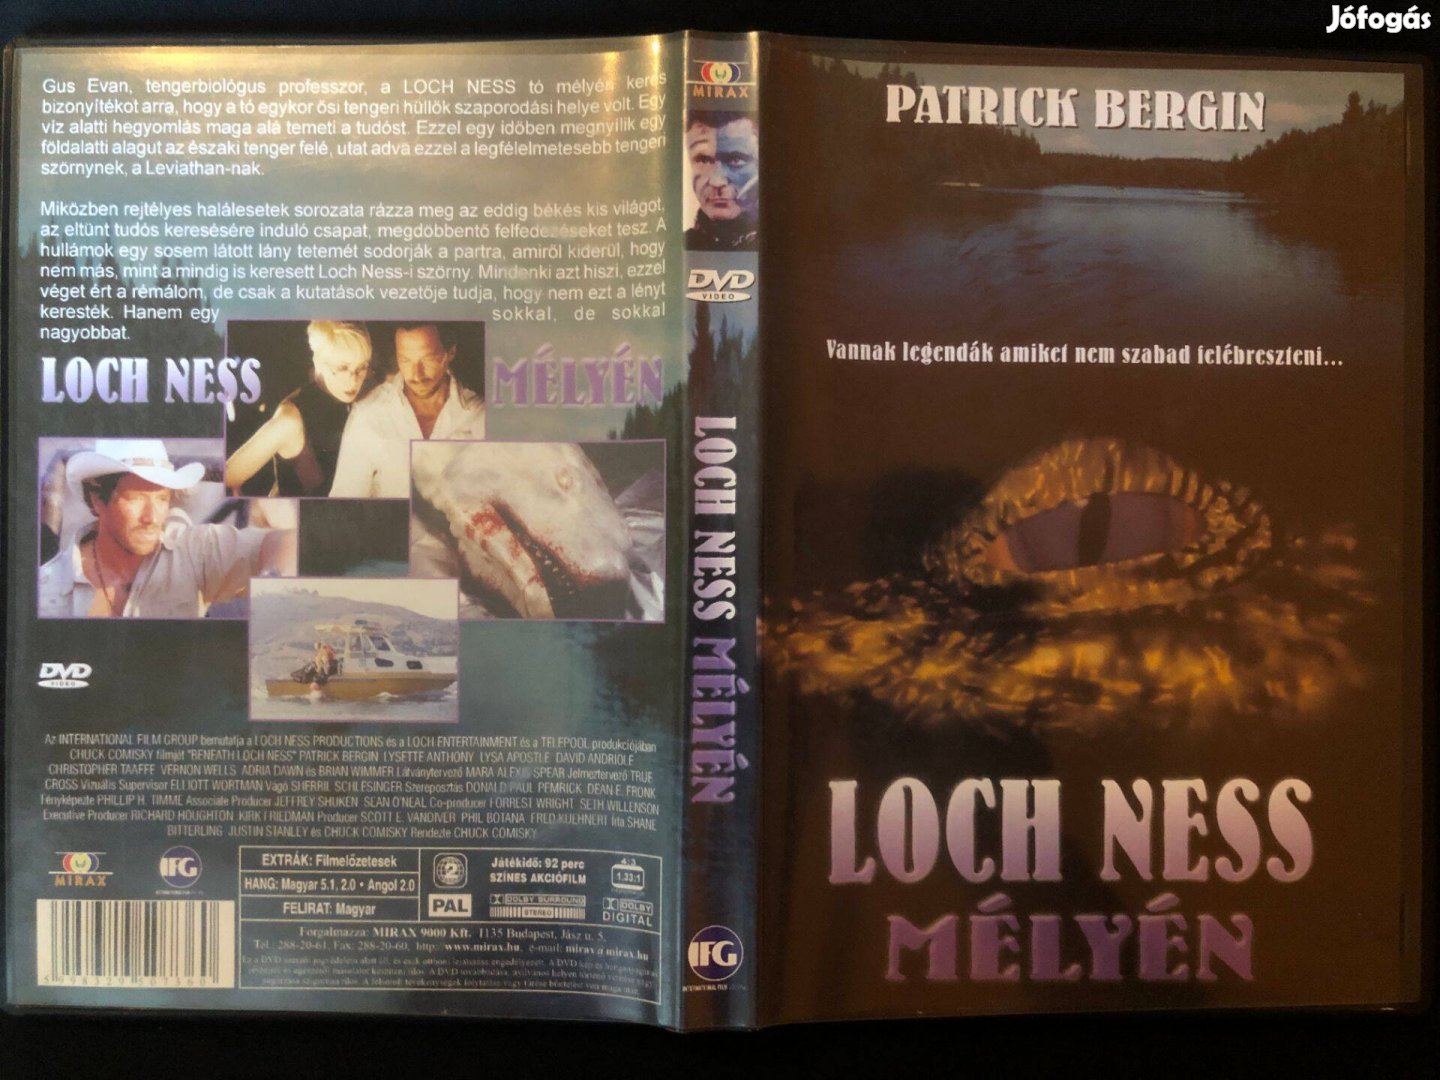 Loch Ness mélyén DVD (karcmentes, Patrick Bergin)